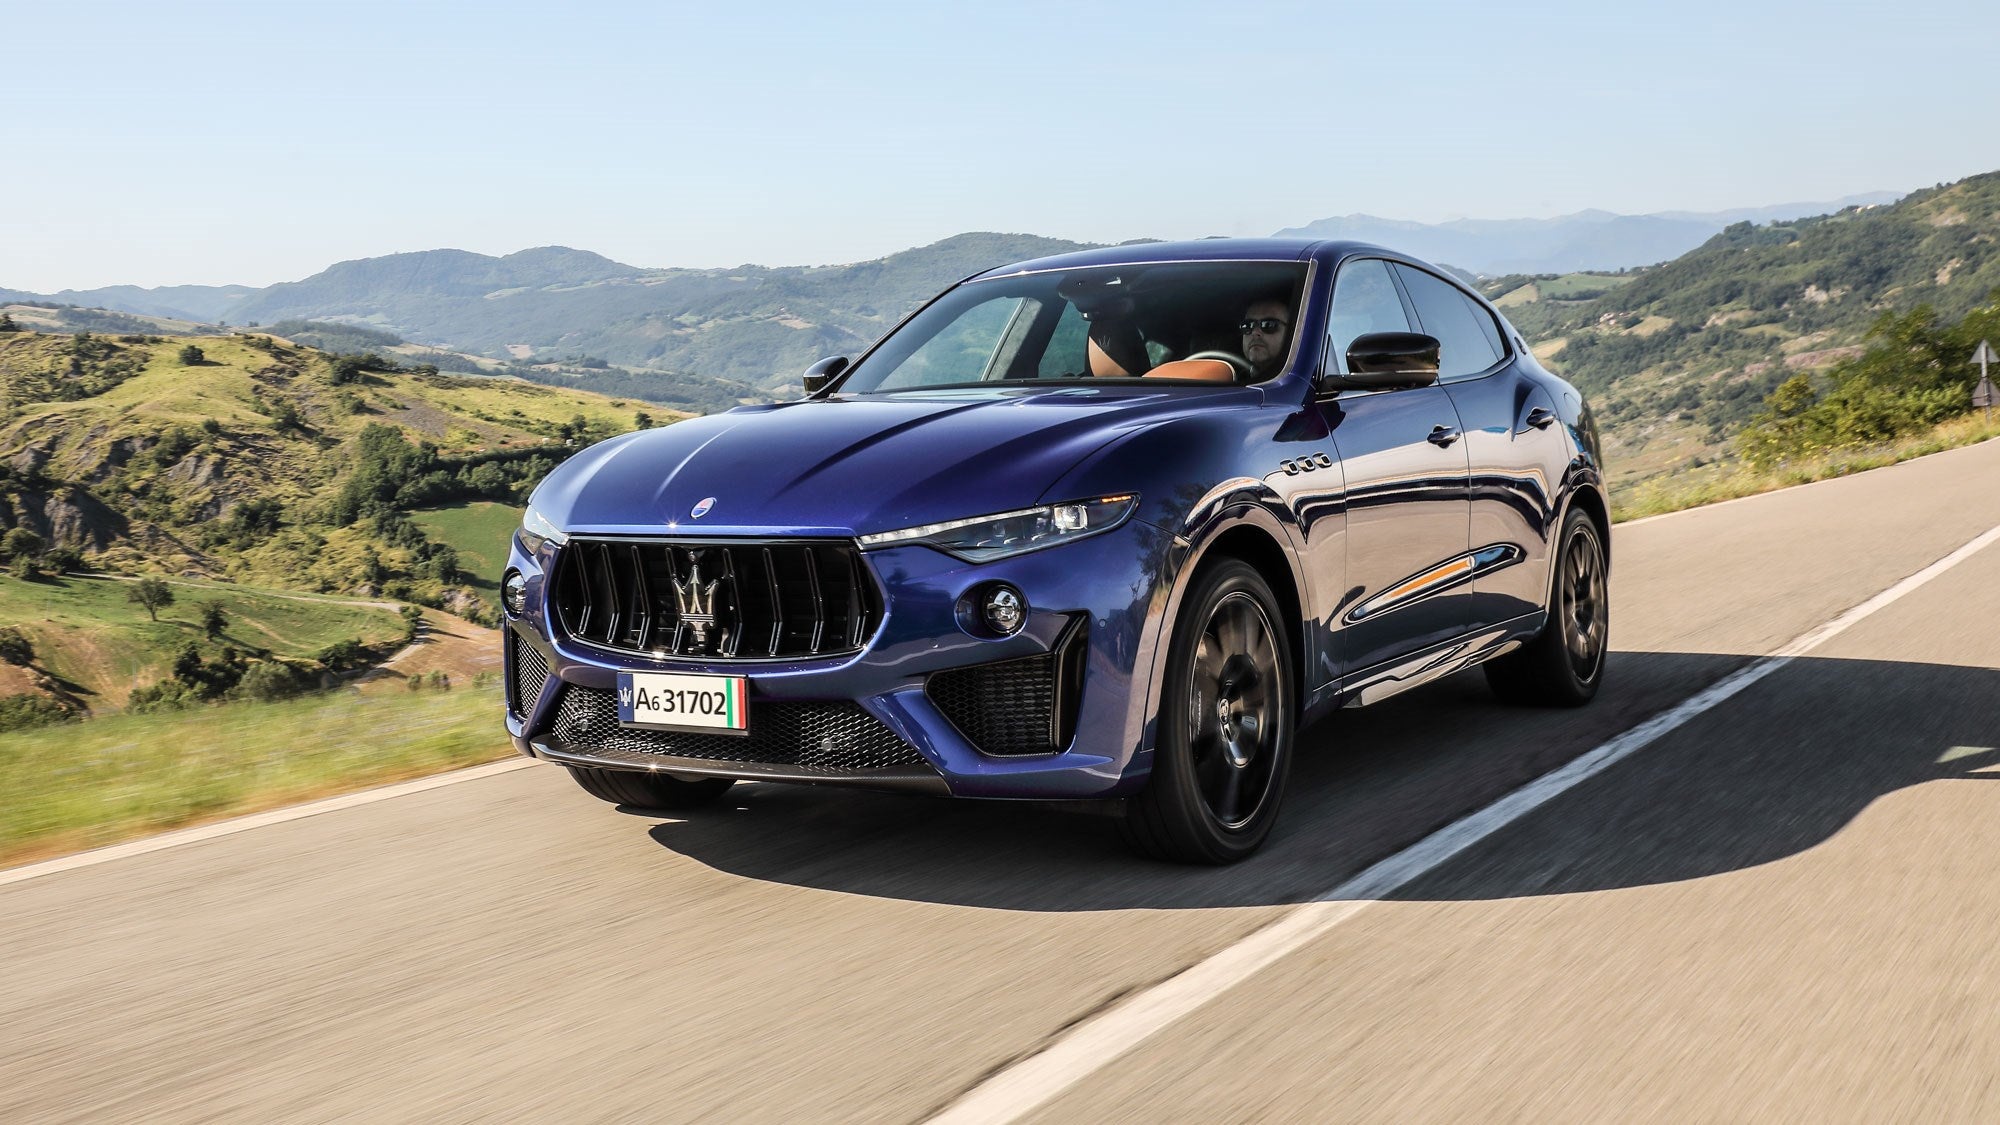 Maserati Image